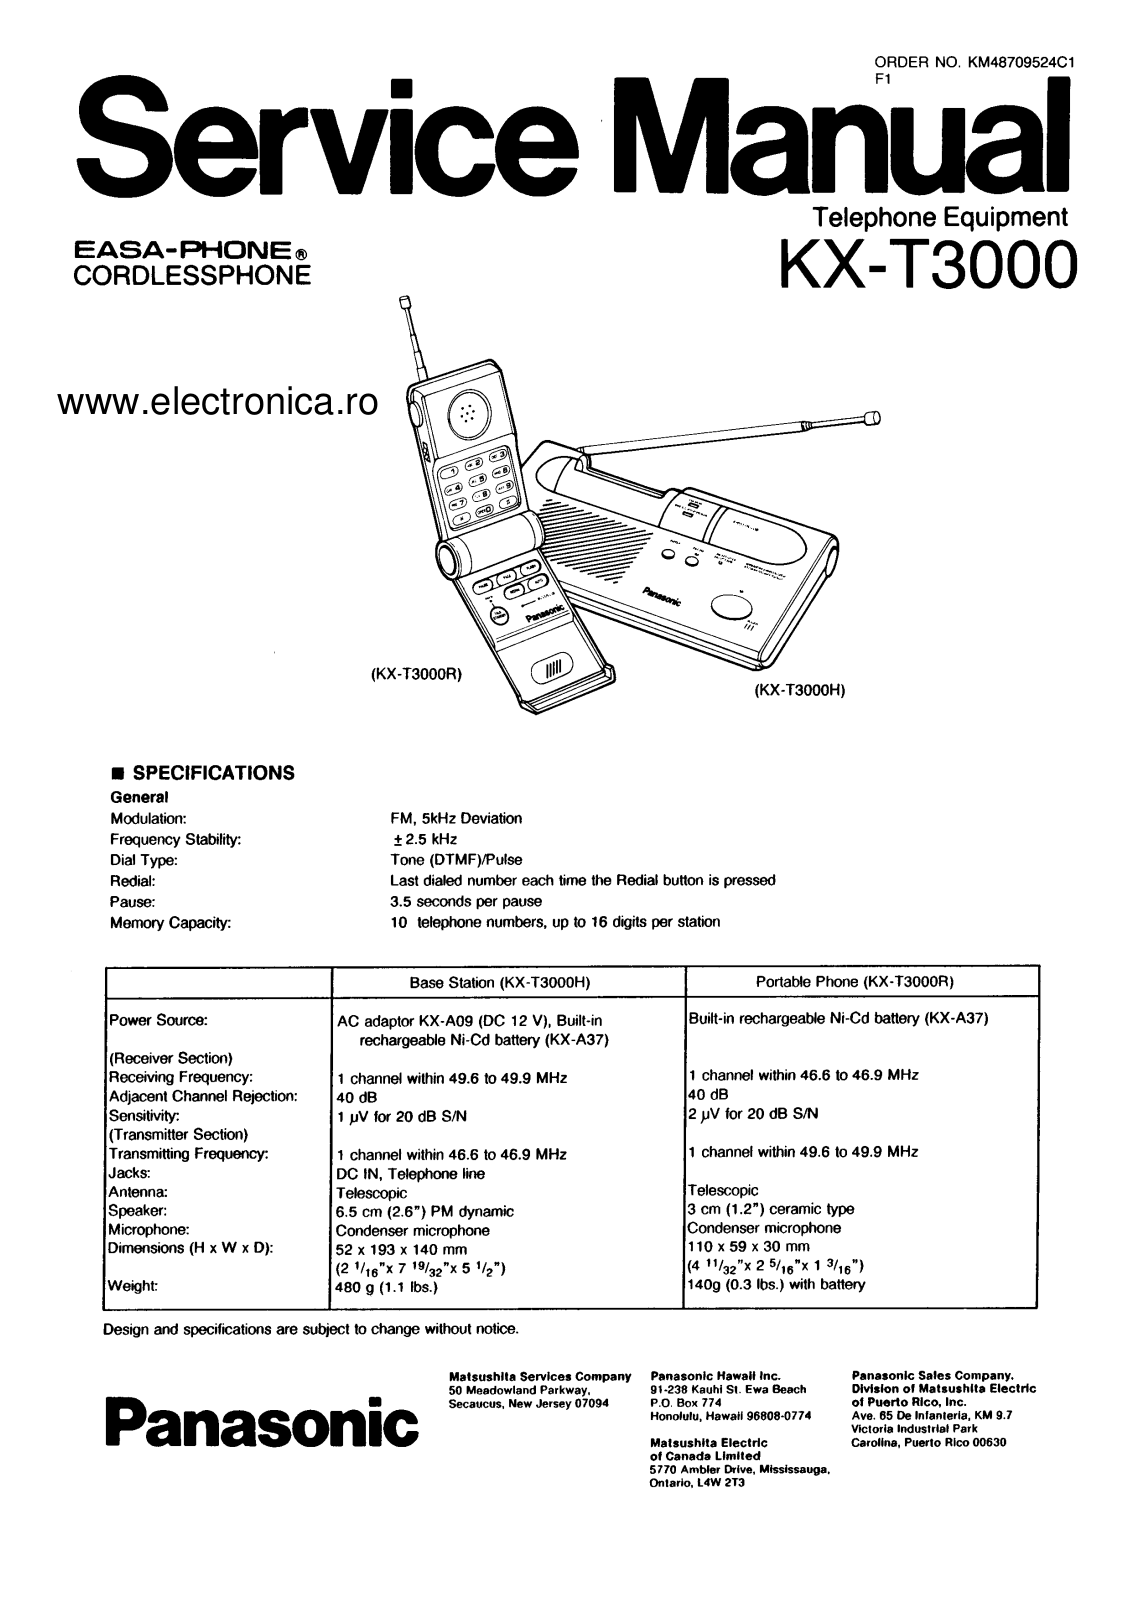 Panasonic KX-T3000R Service Manual